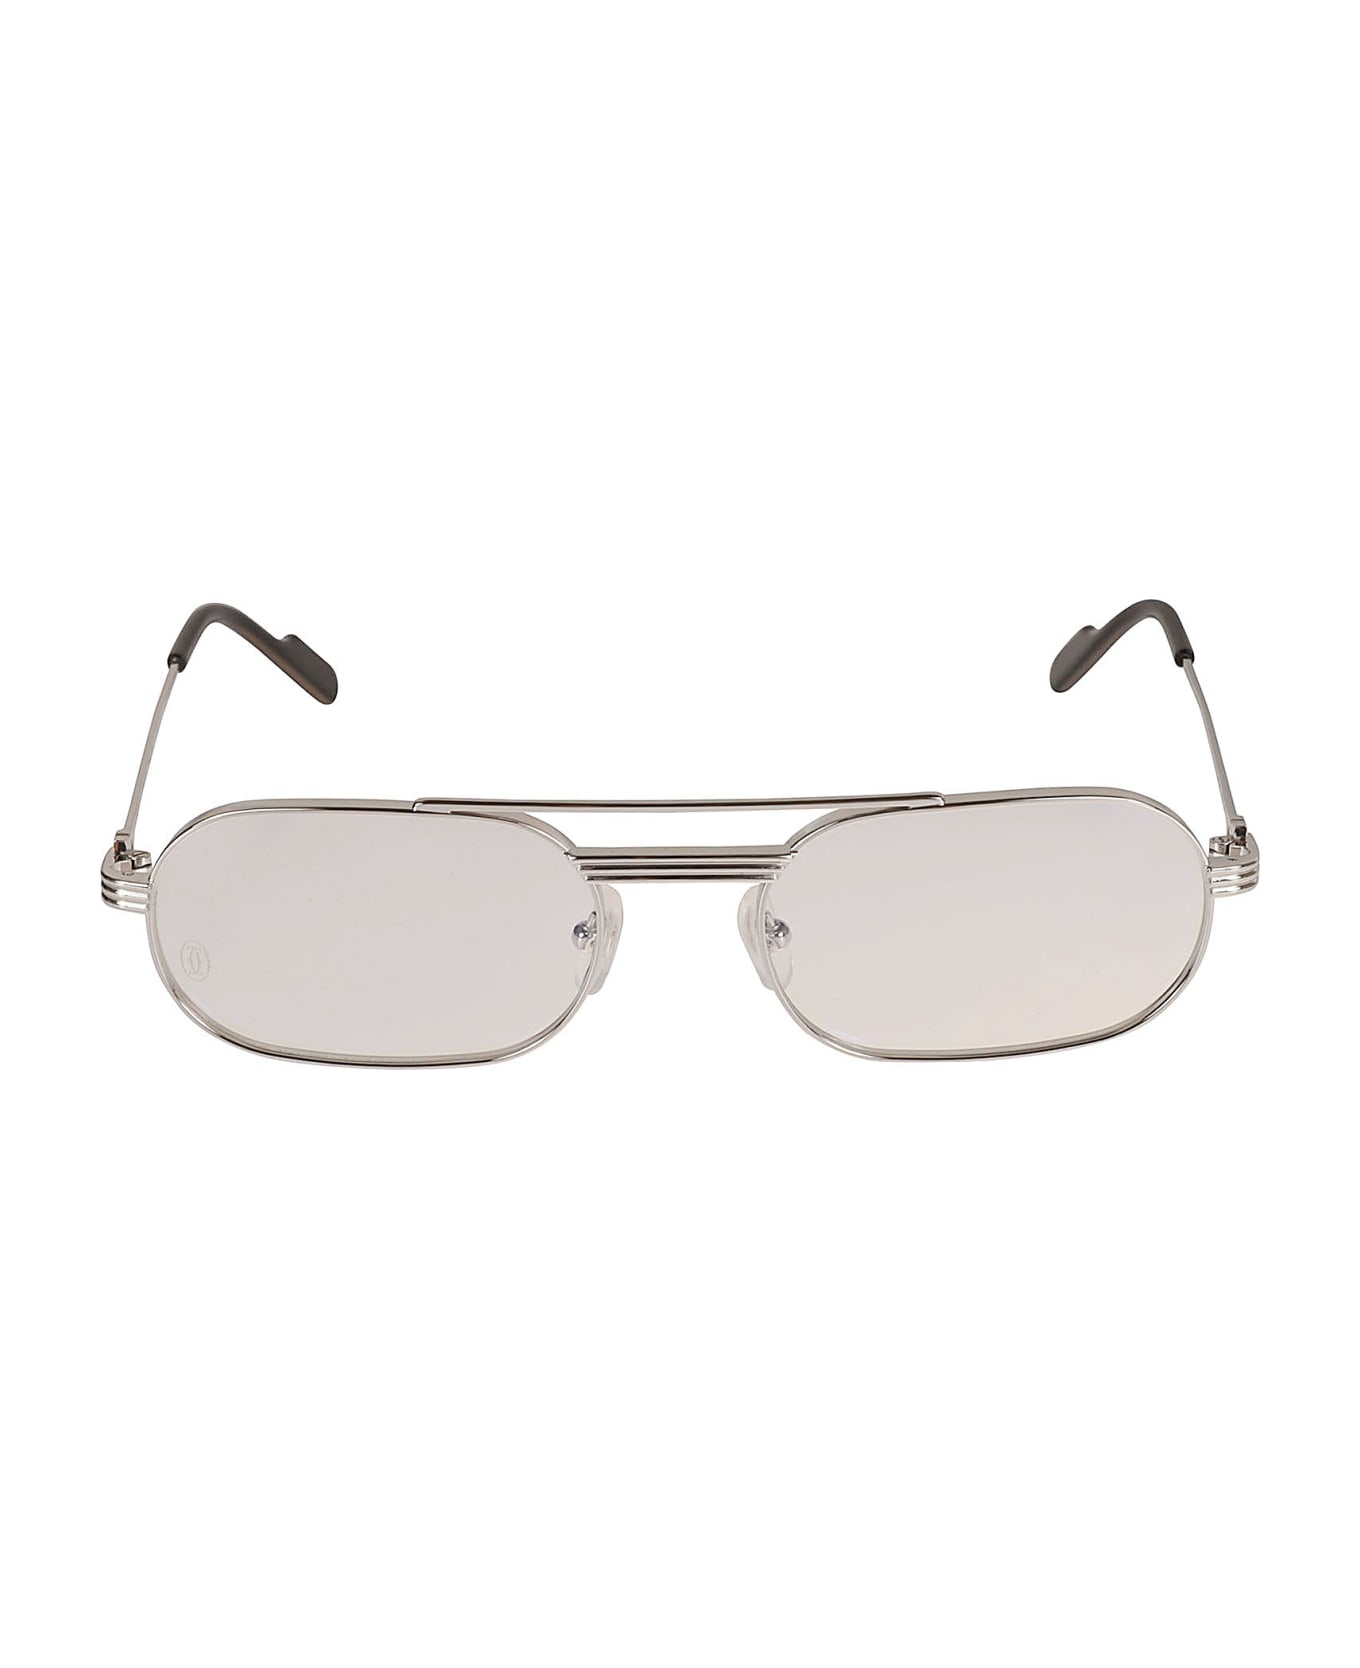 Cartier Eyewear Aviator Oval Frame - Silver